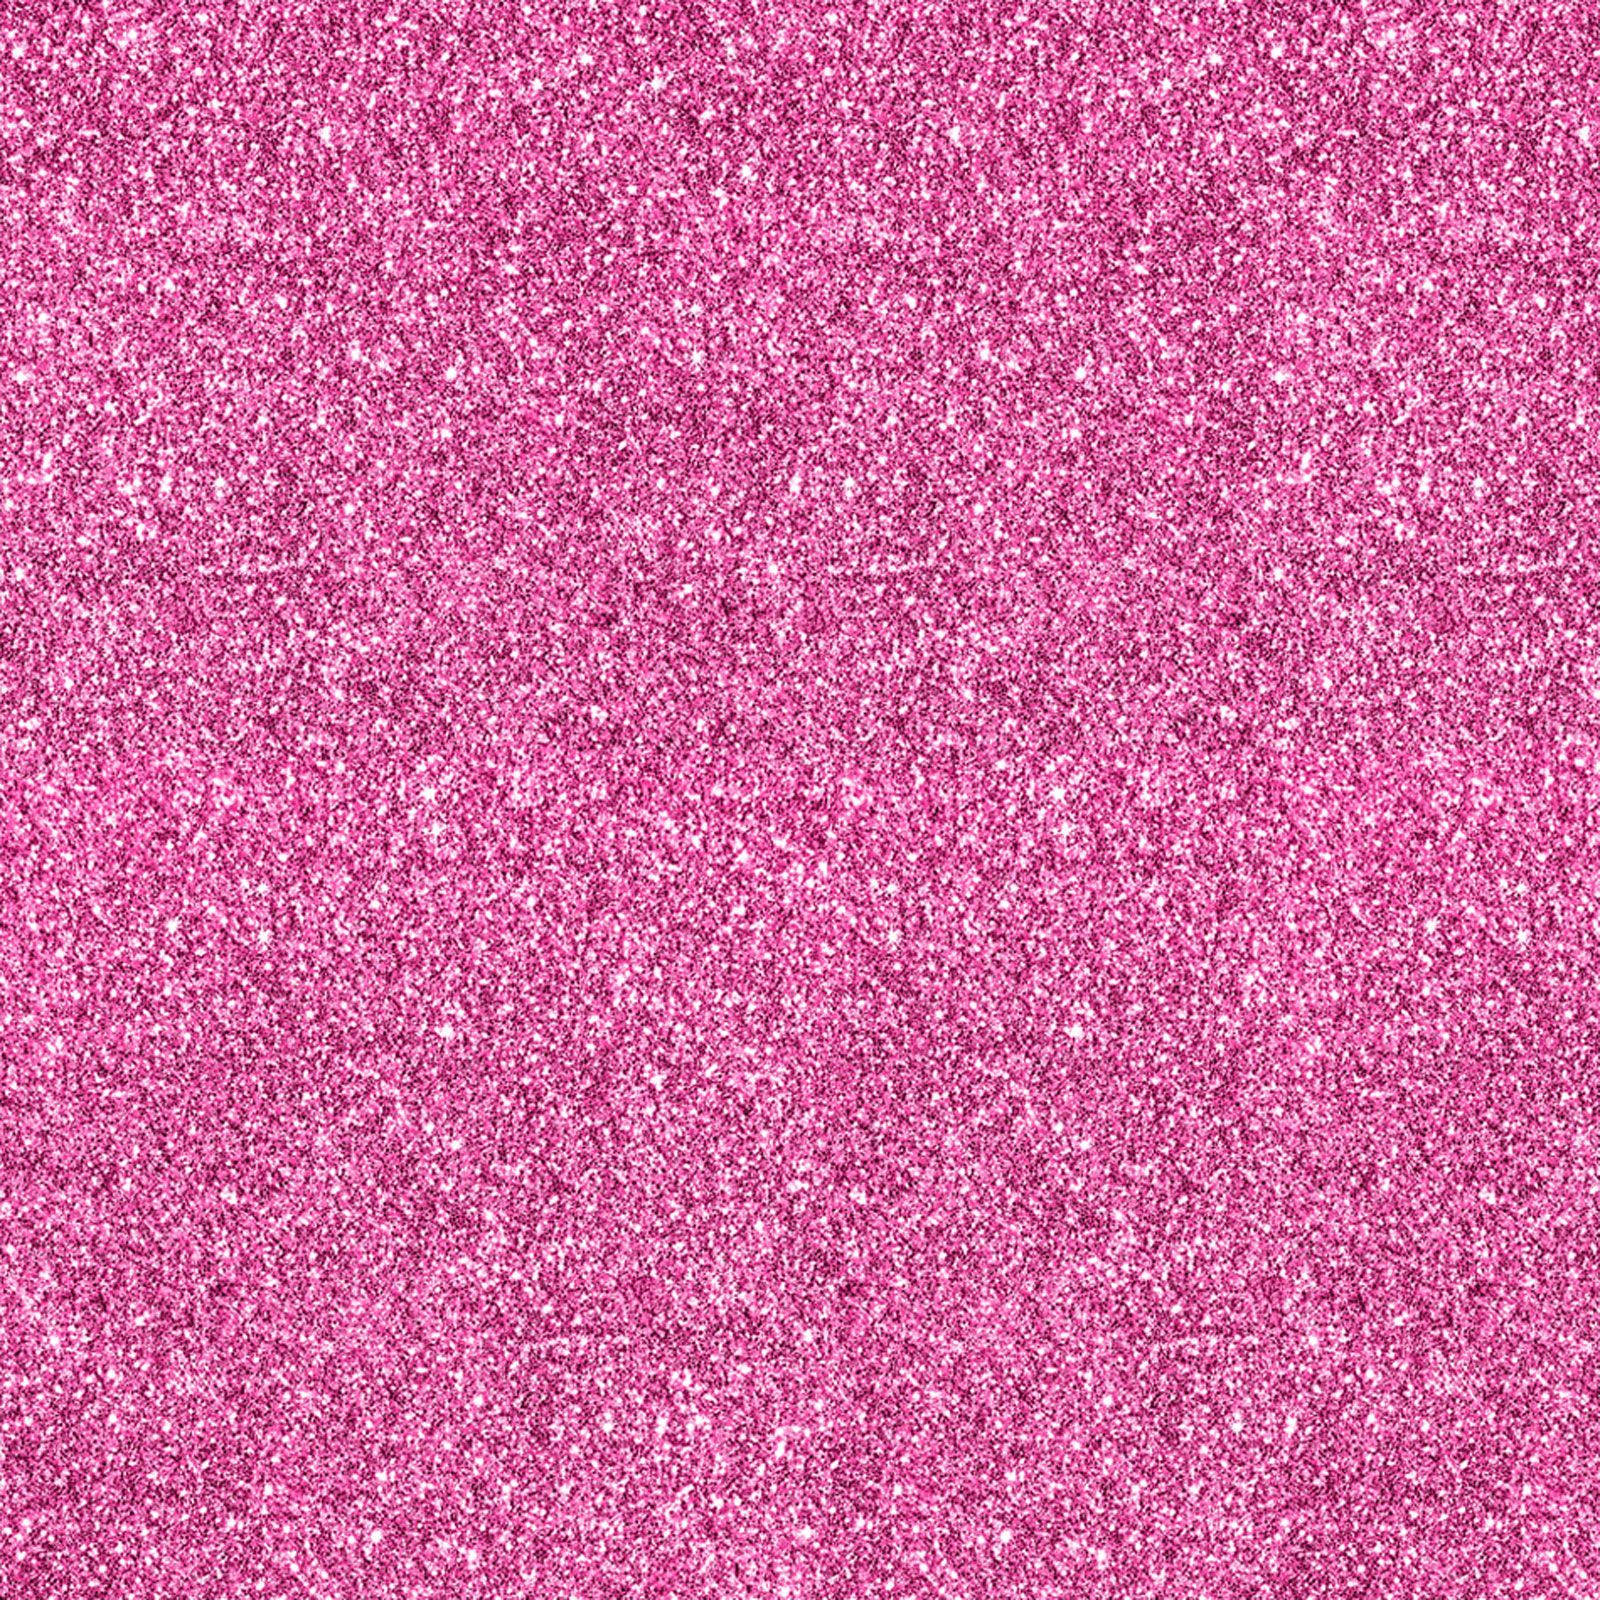 Grainy Pink Glitters